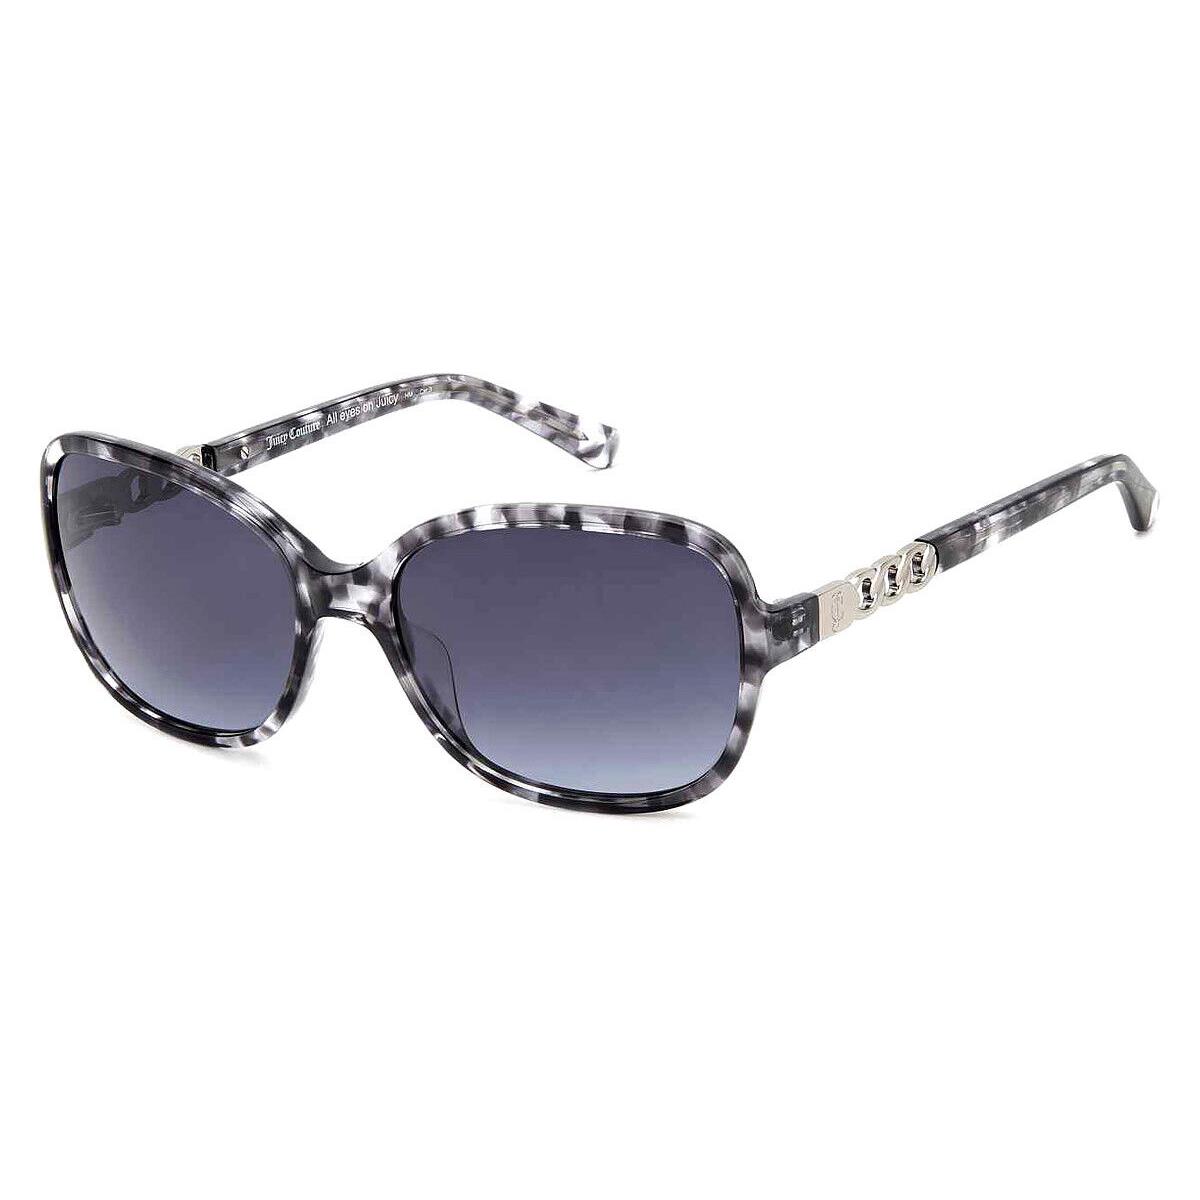 Juicy Couture Juc Sunglasses Gray Havana Ruthenium / Gray Shaded - Frame: Gray Havana Ruthenium / Gray Shaded, Lens: Gray Shaded